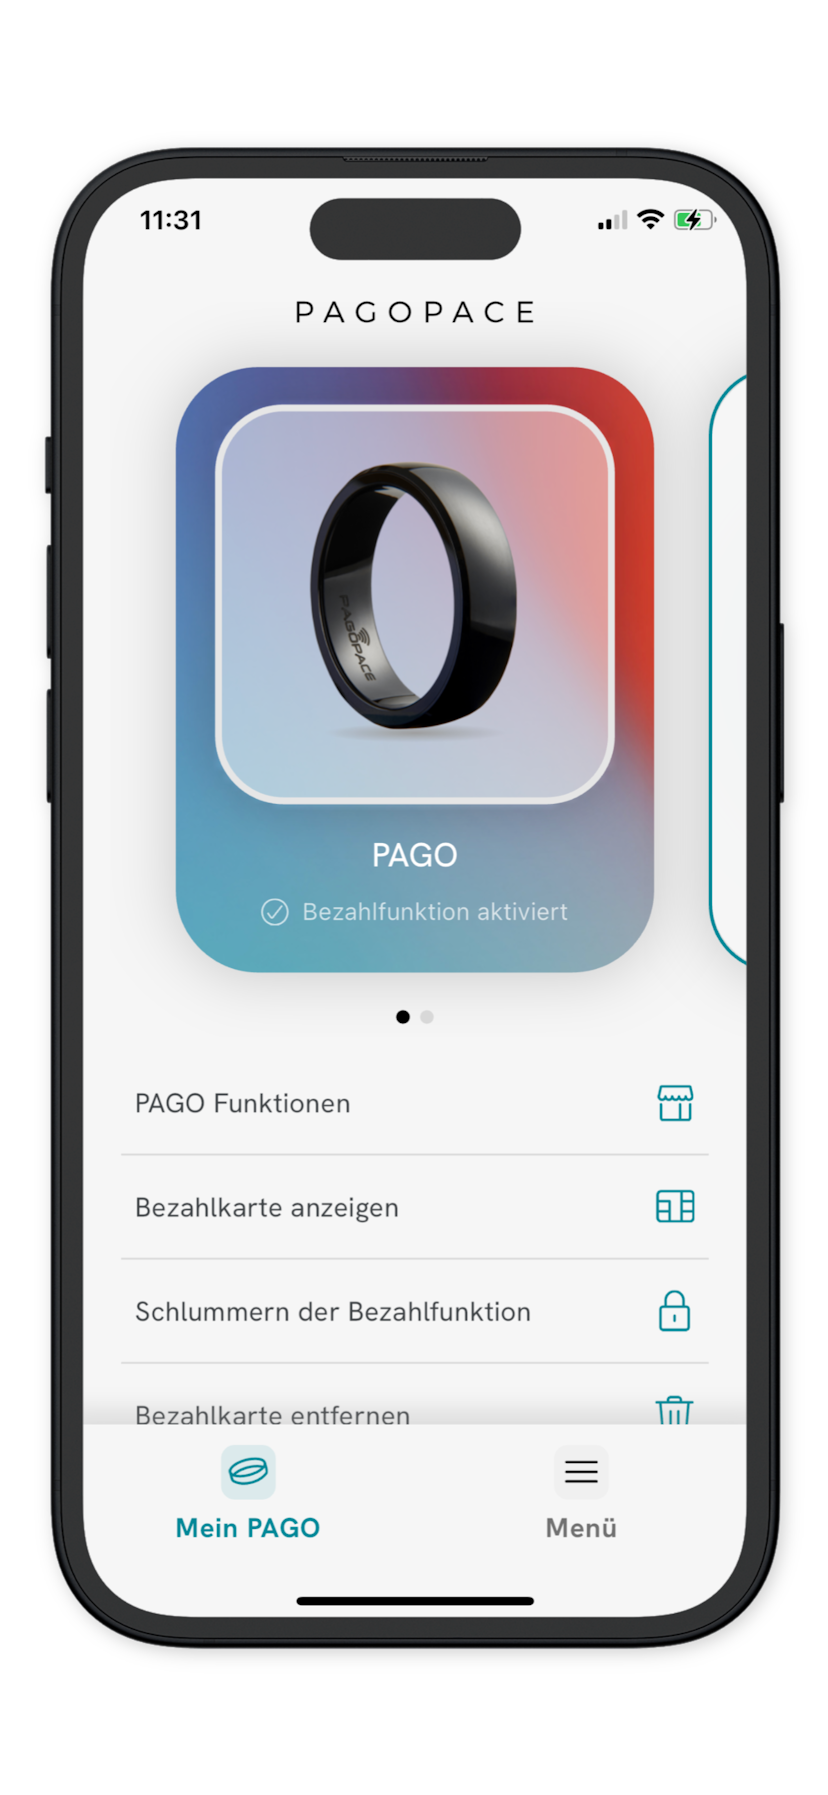 PAGOPAGE App Design: Home Screen